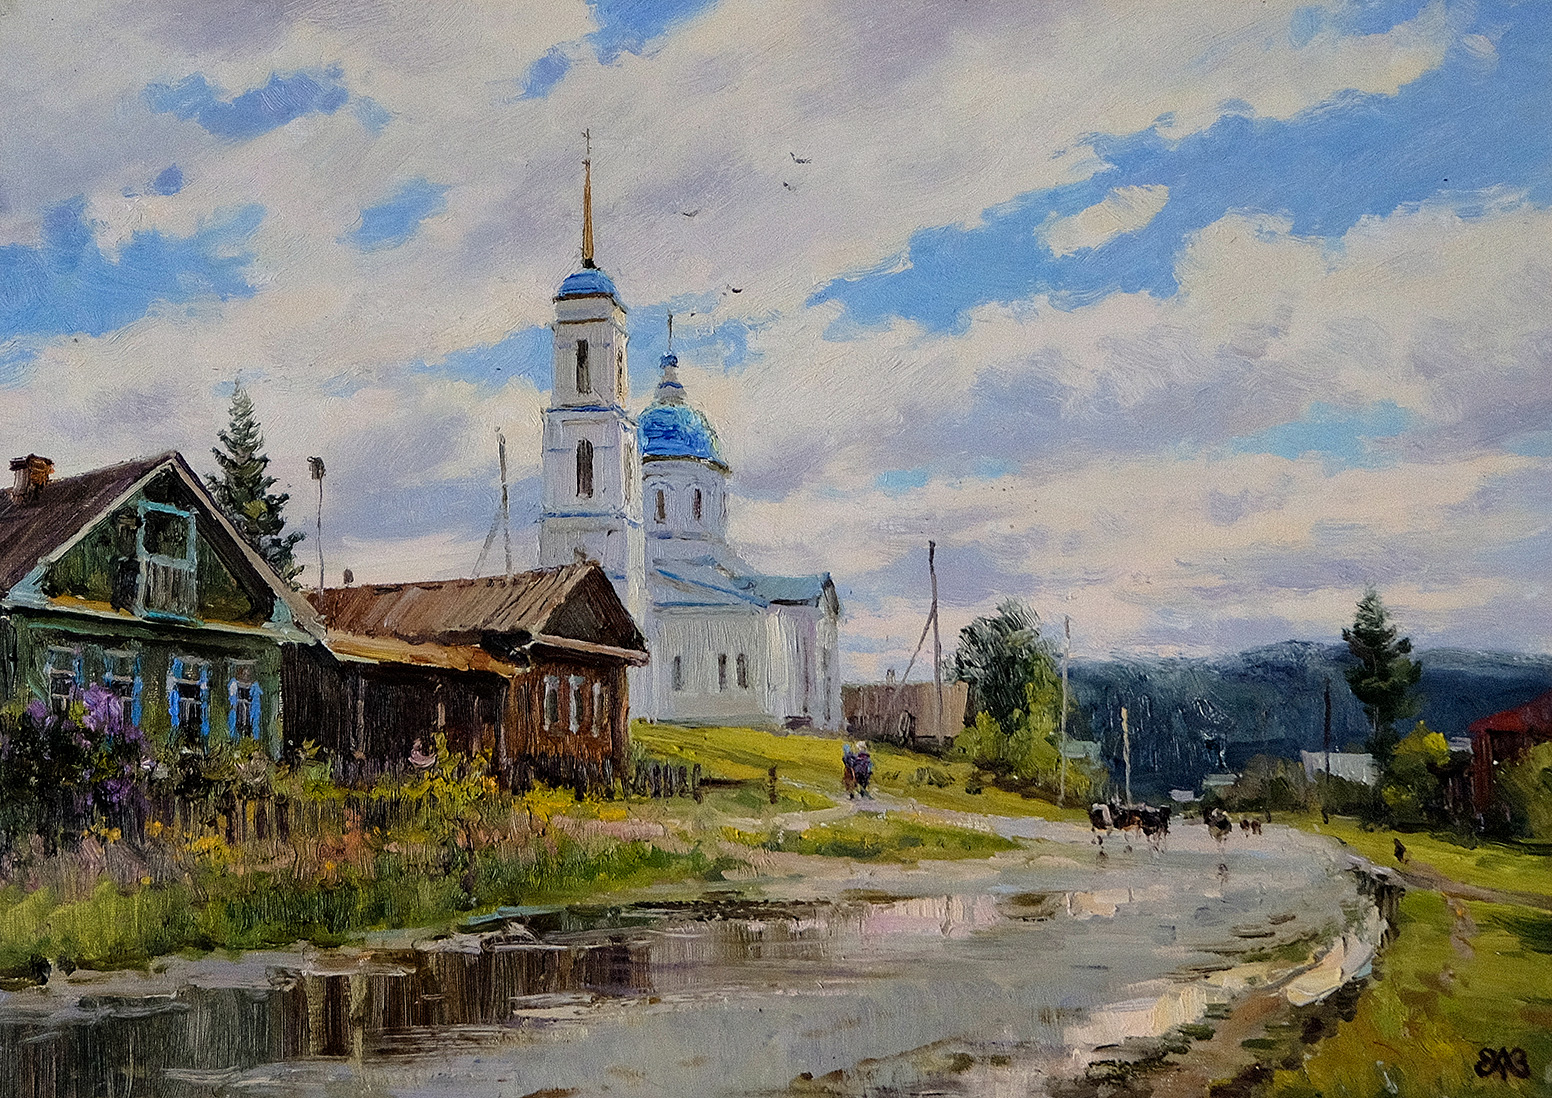 Cherdantsevo. After the rain - 1, Alexey Efremov, Buy the painting Oil